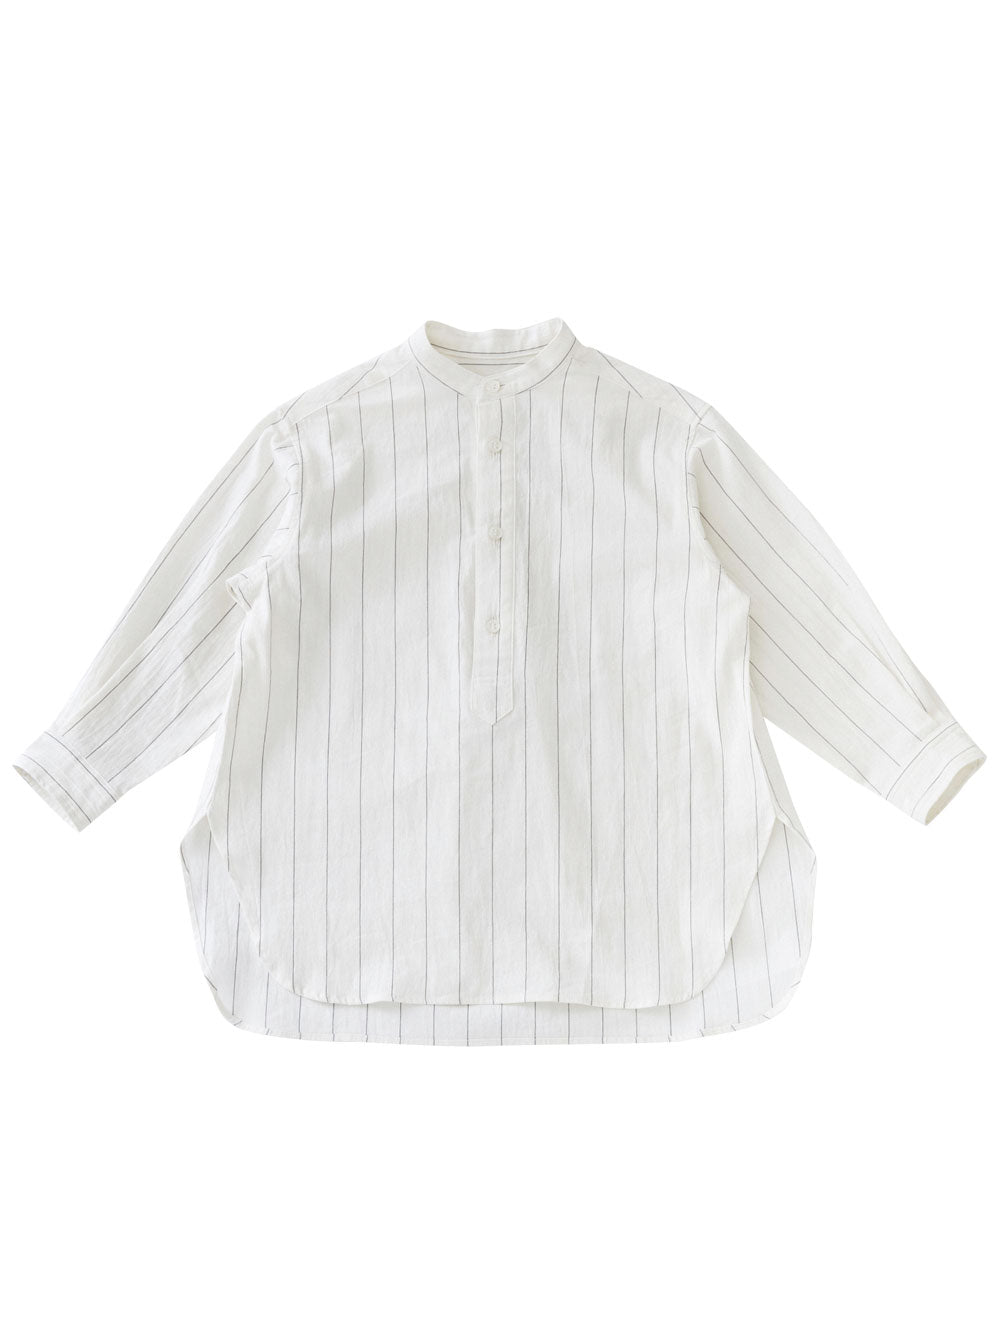 PREORDER: White Stripe Shirt